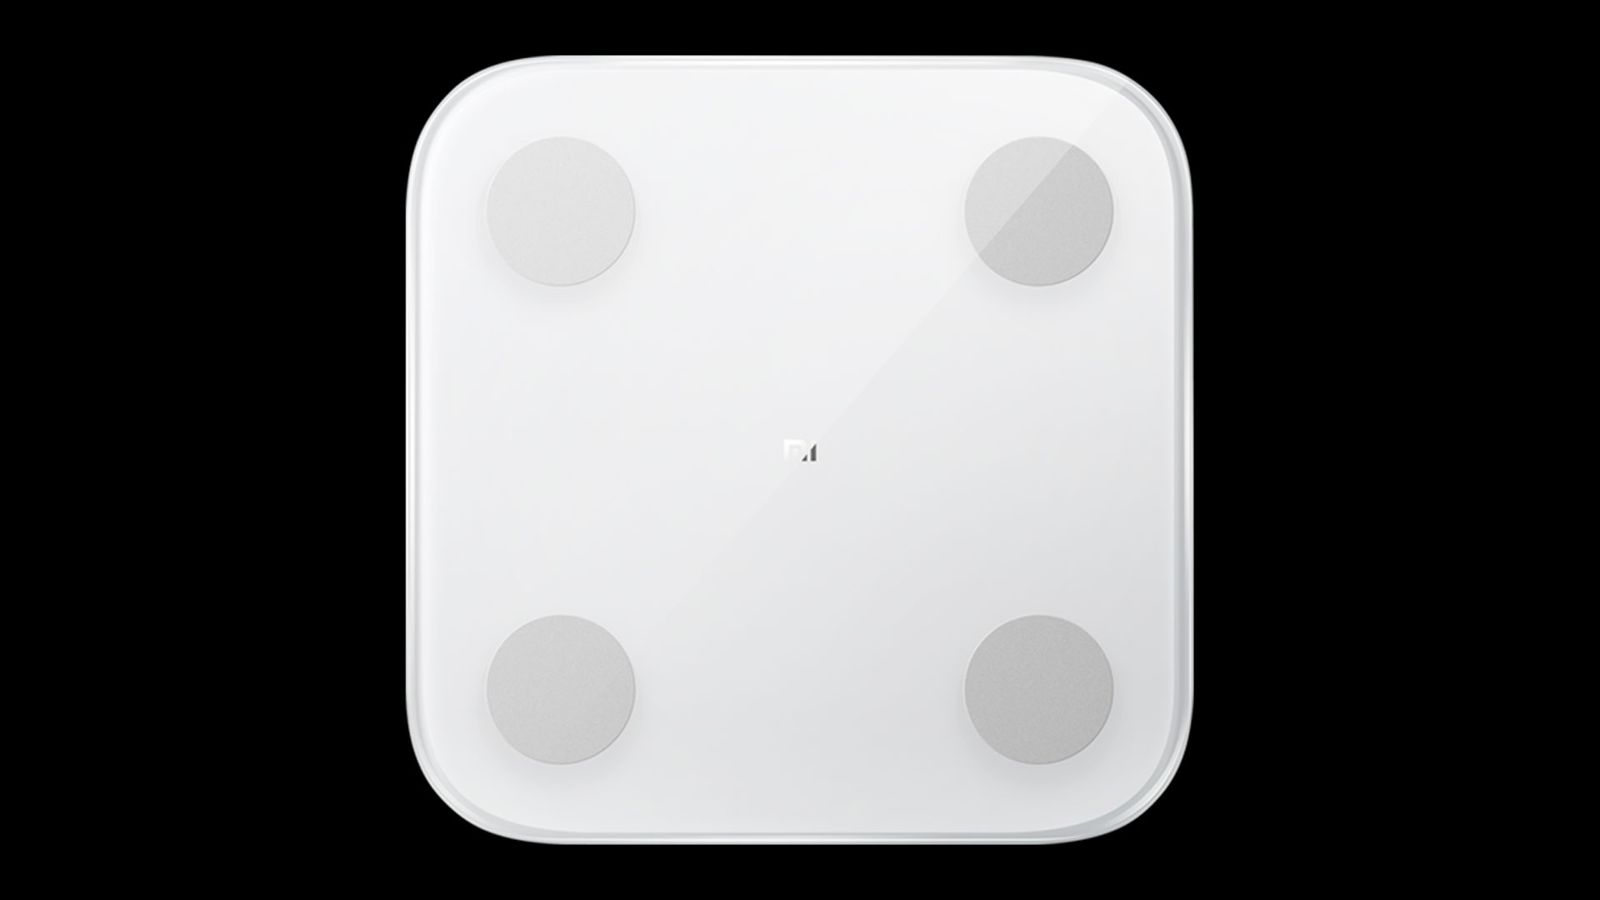 Xiaomi Mi 2 Smart Scale product image of a white scale.